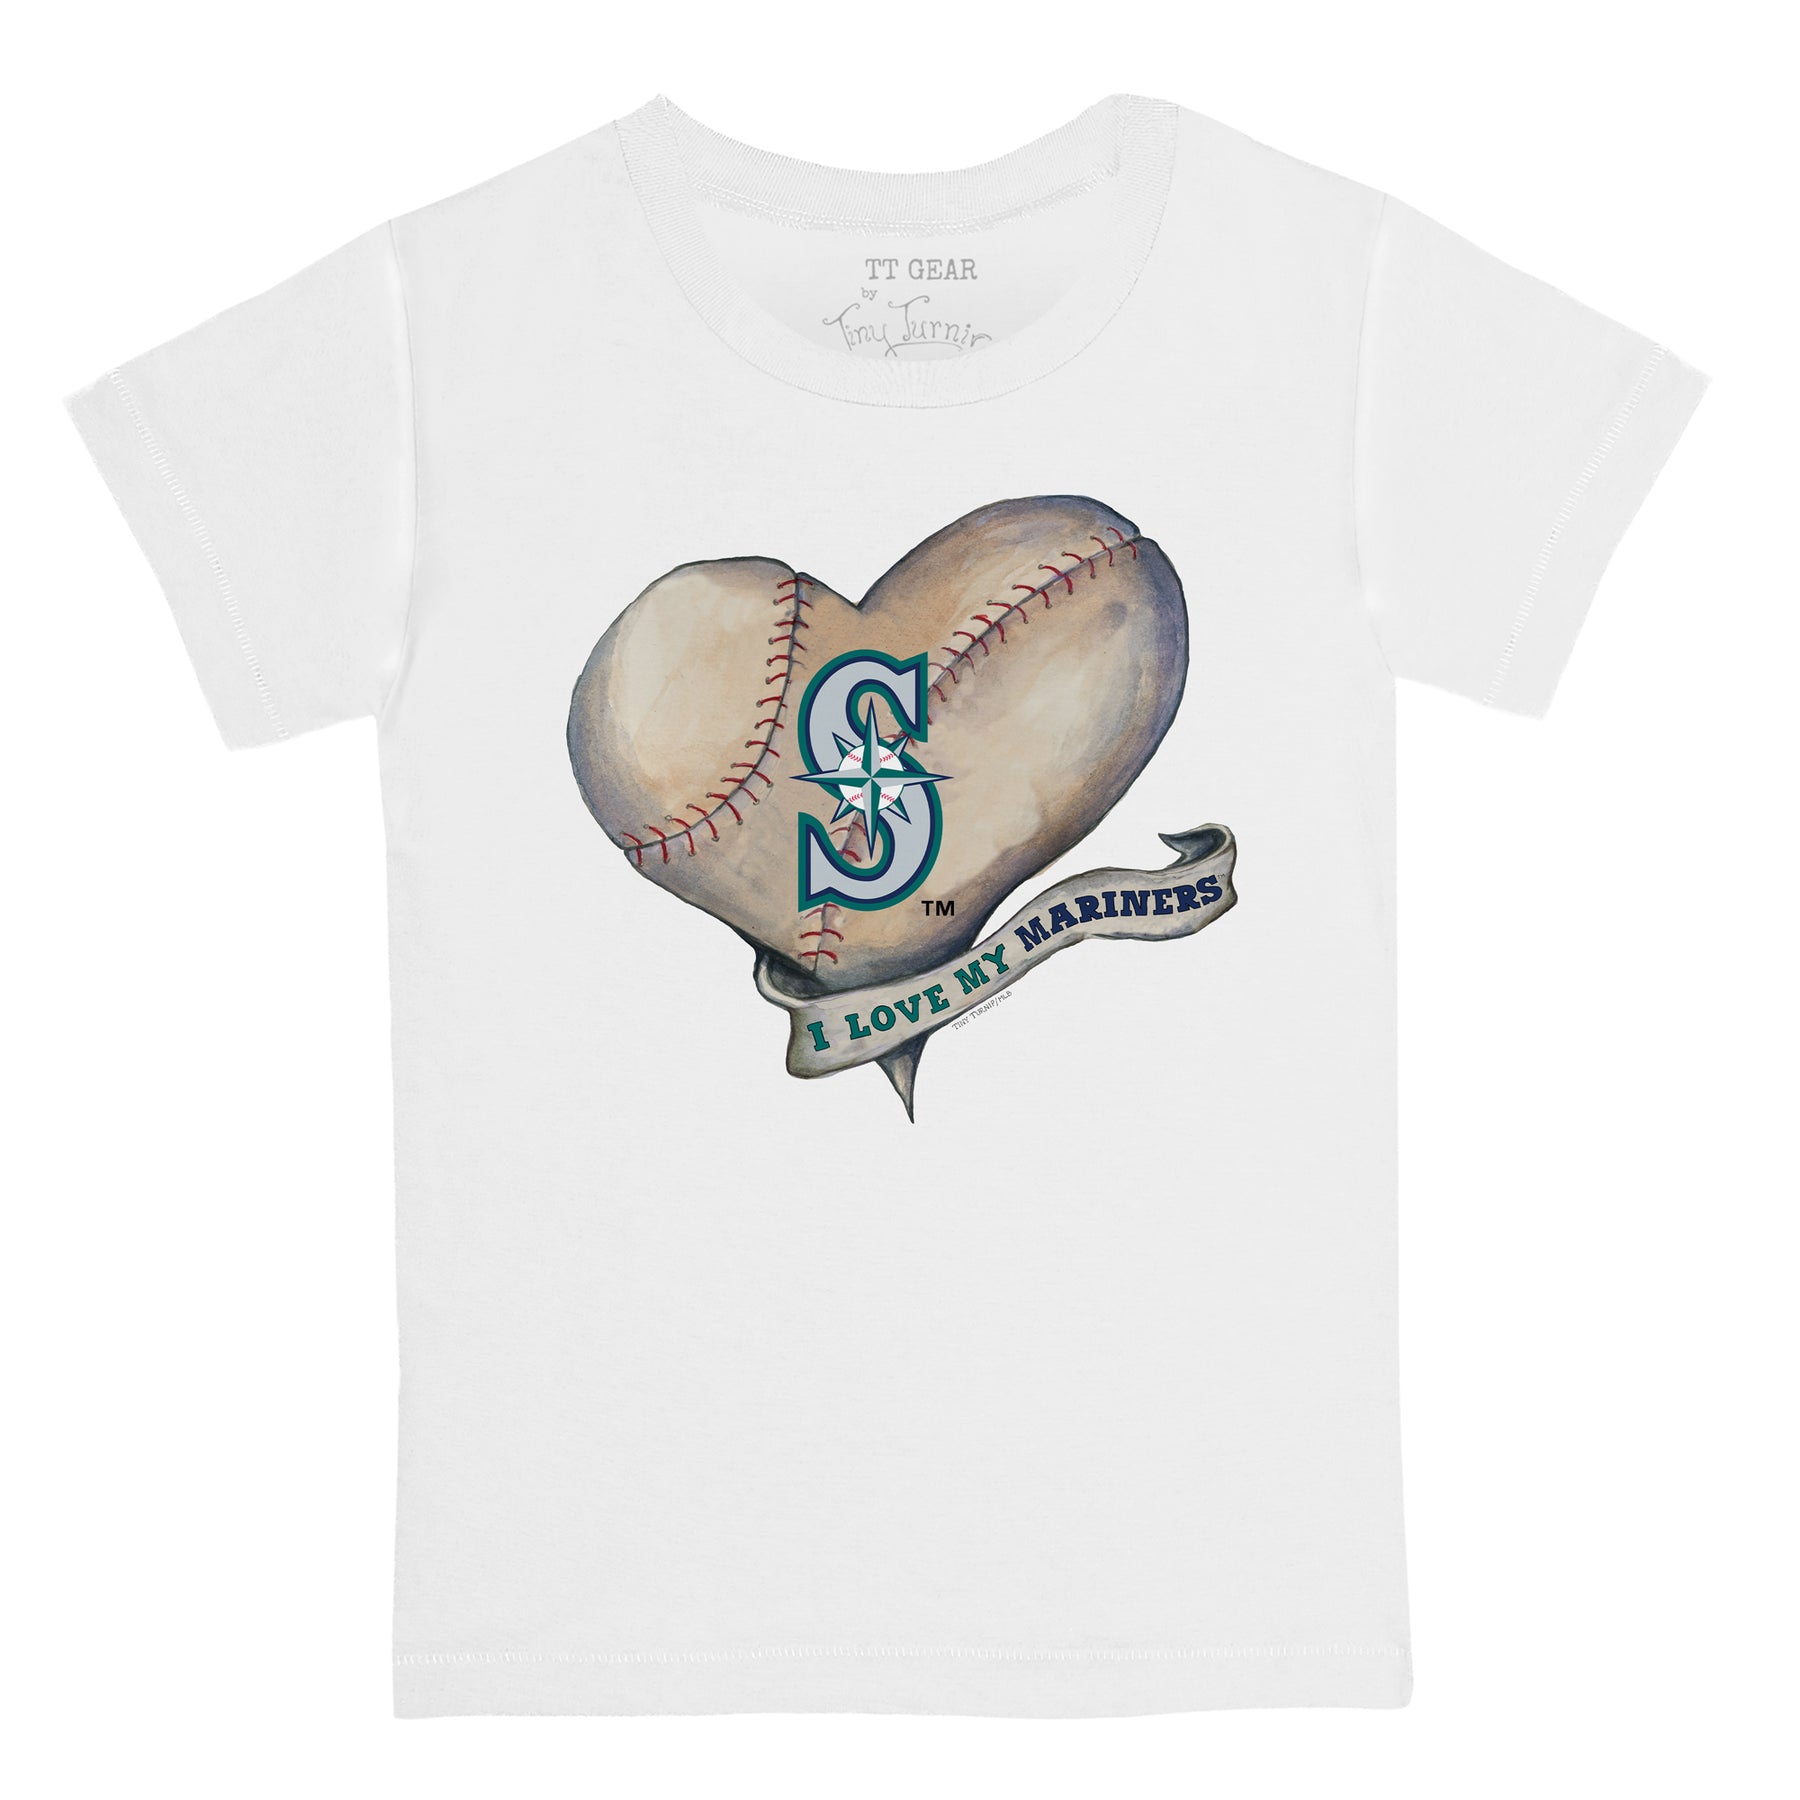 Seattle Mariners Blooming Baseballs Tee Shirt Women's XL / Navy Blue